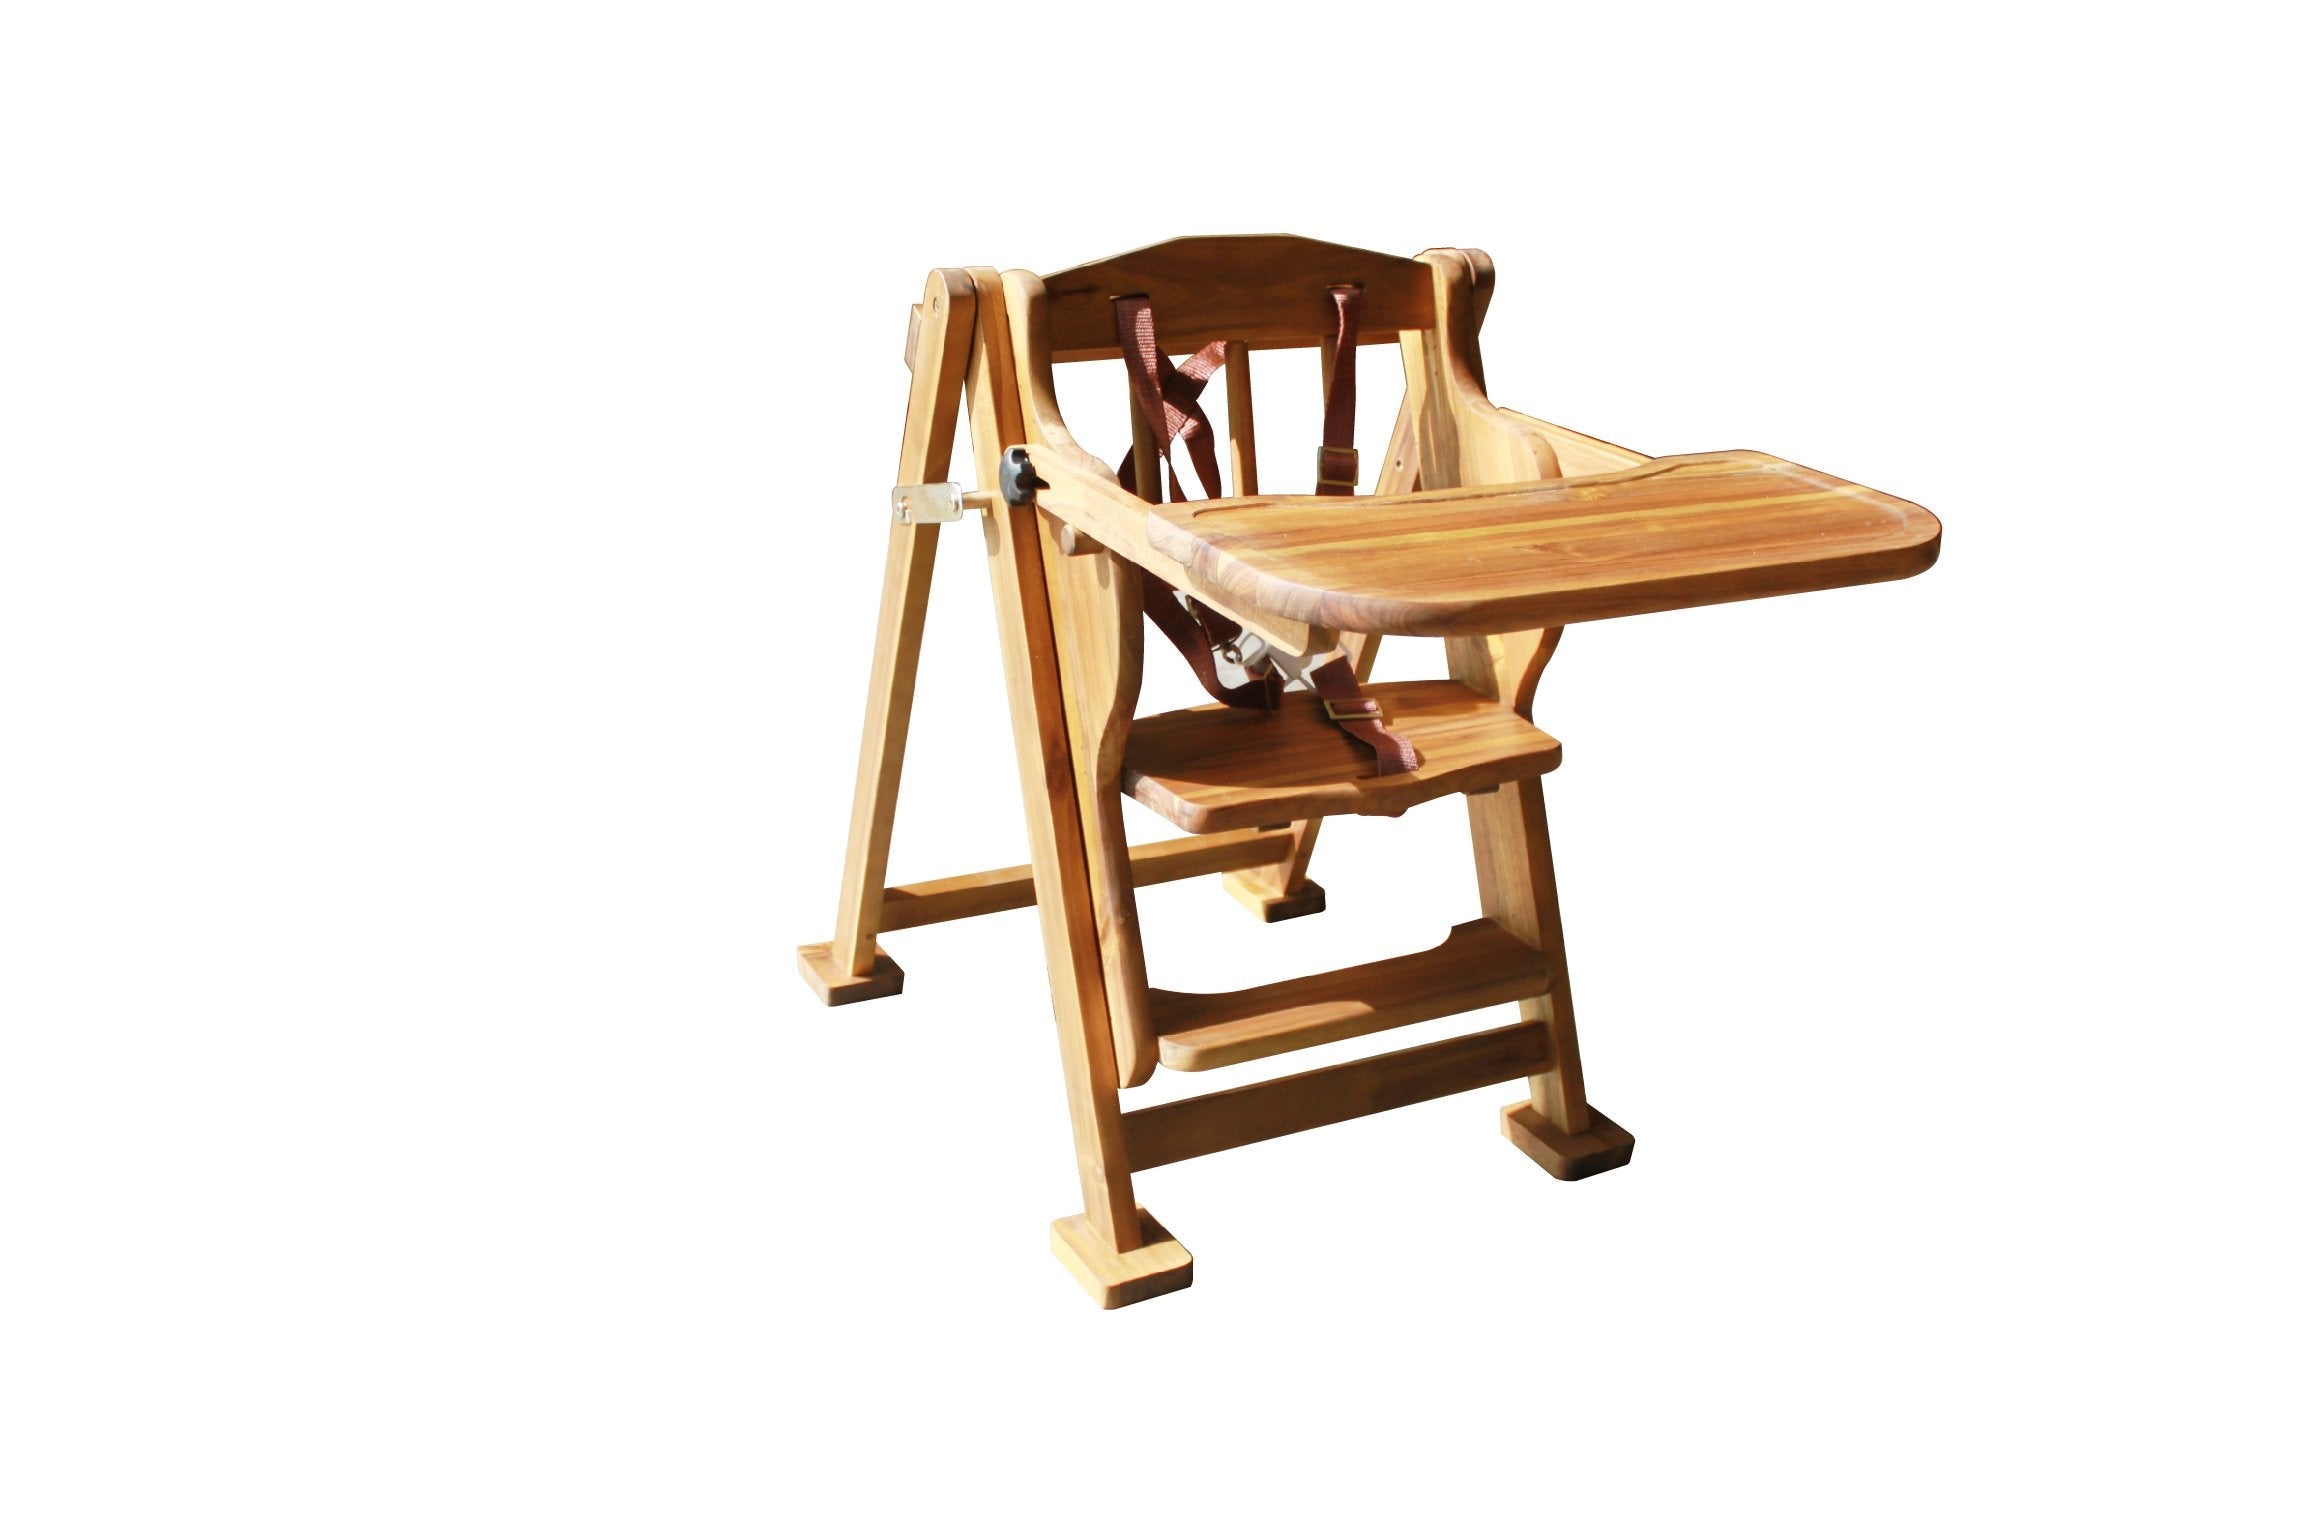 Adjustable/Hi Lo High Chair (Acacia)